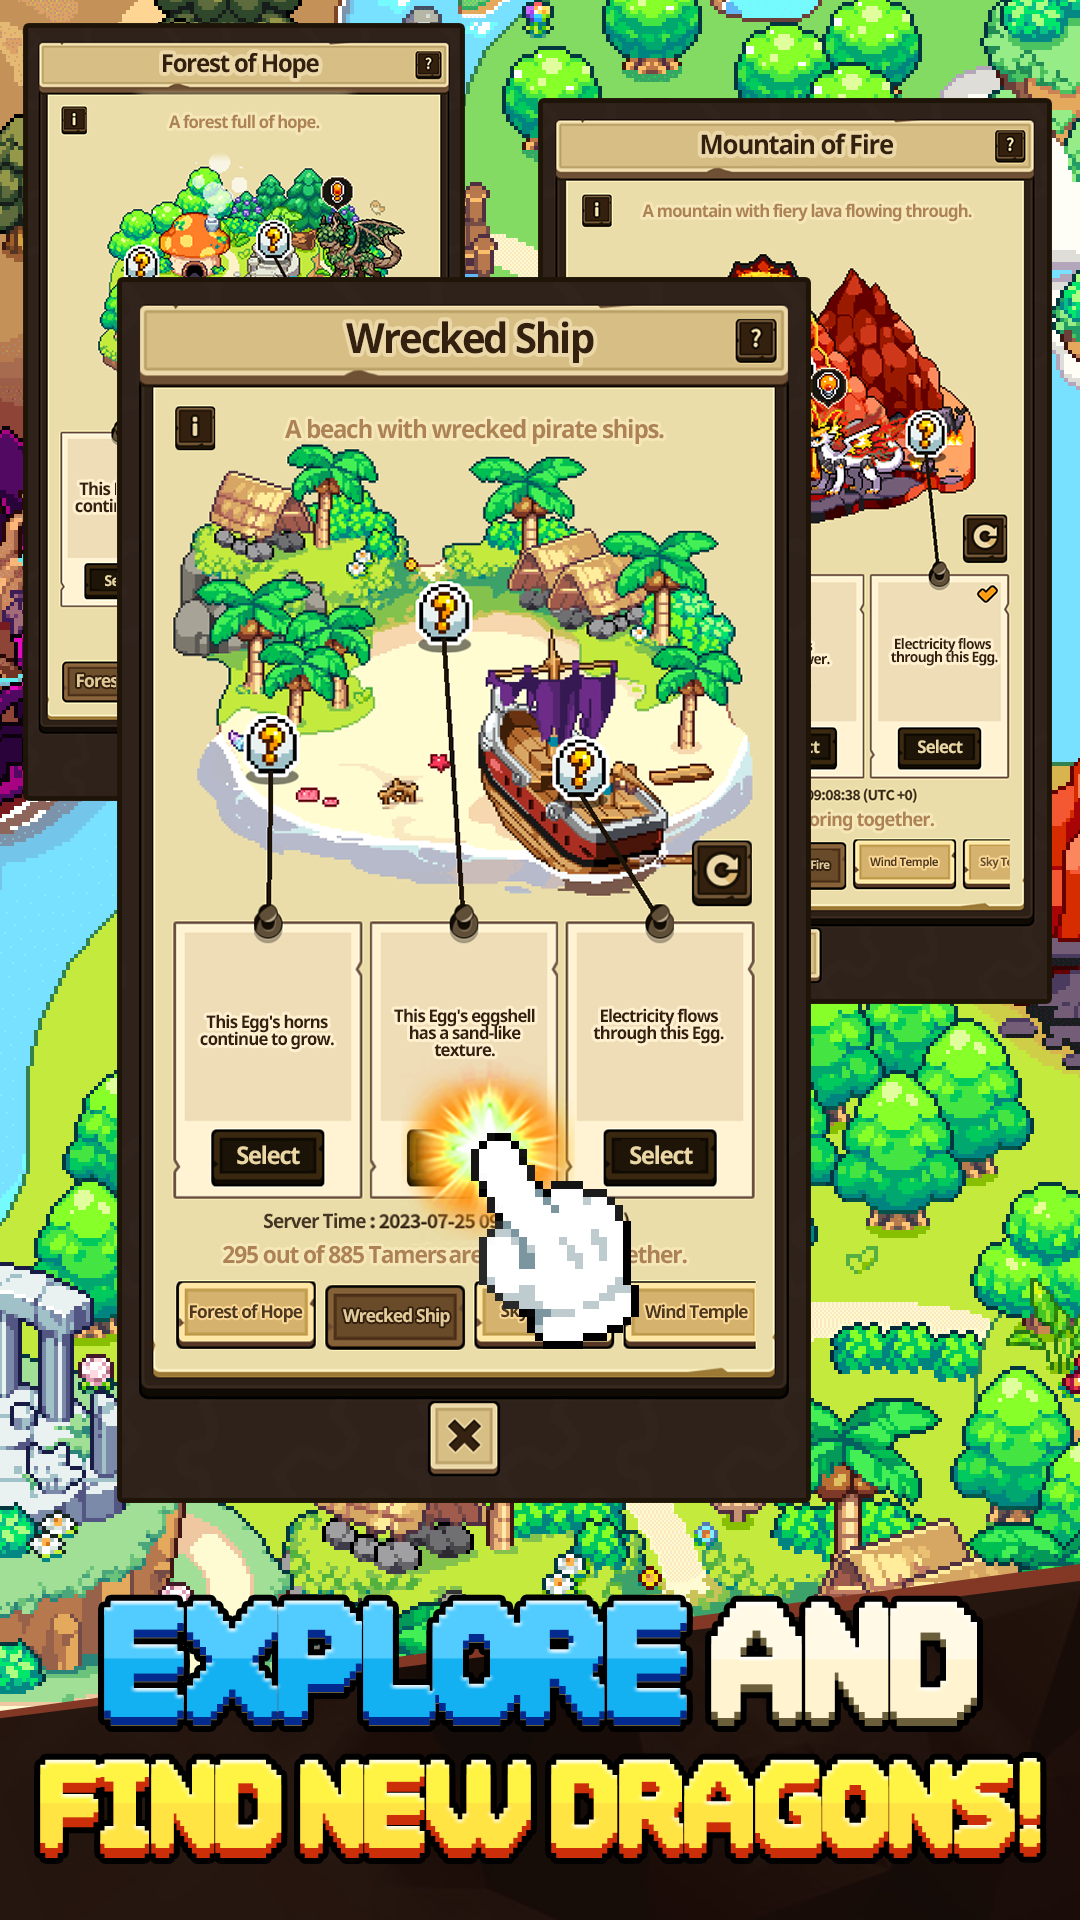 Dragon Village Collection screenshot game